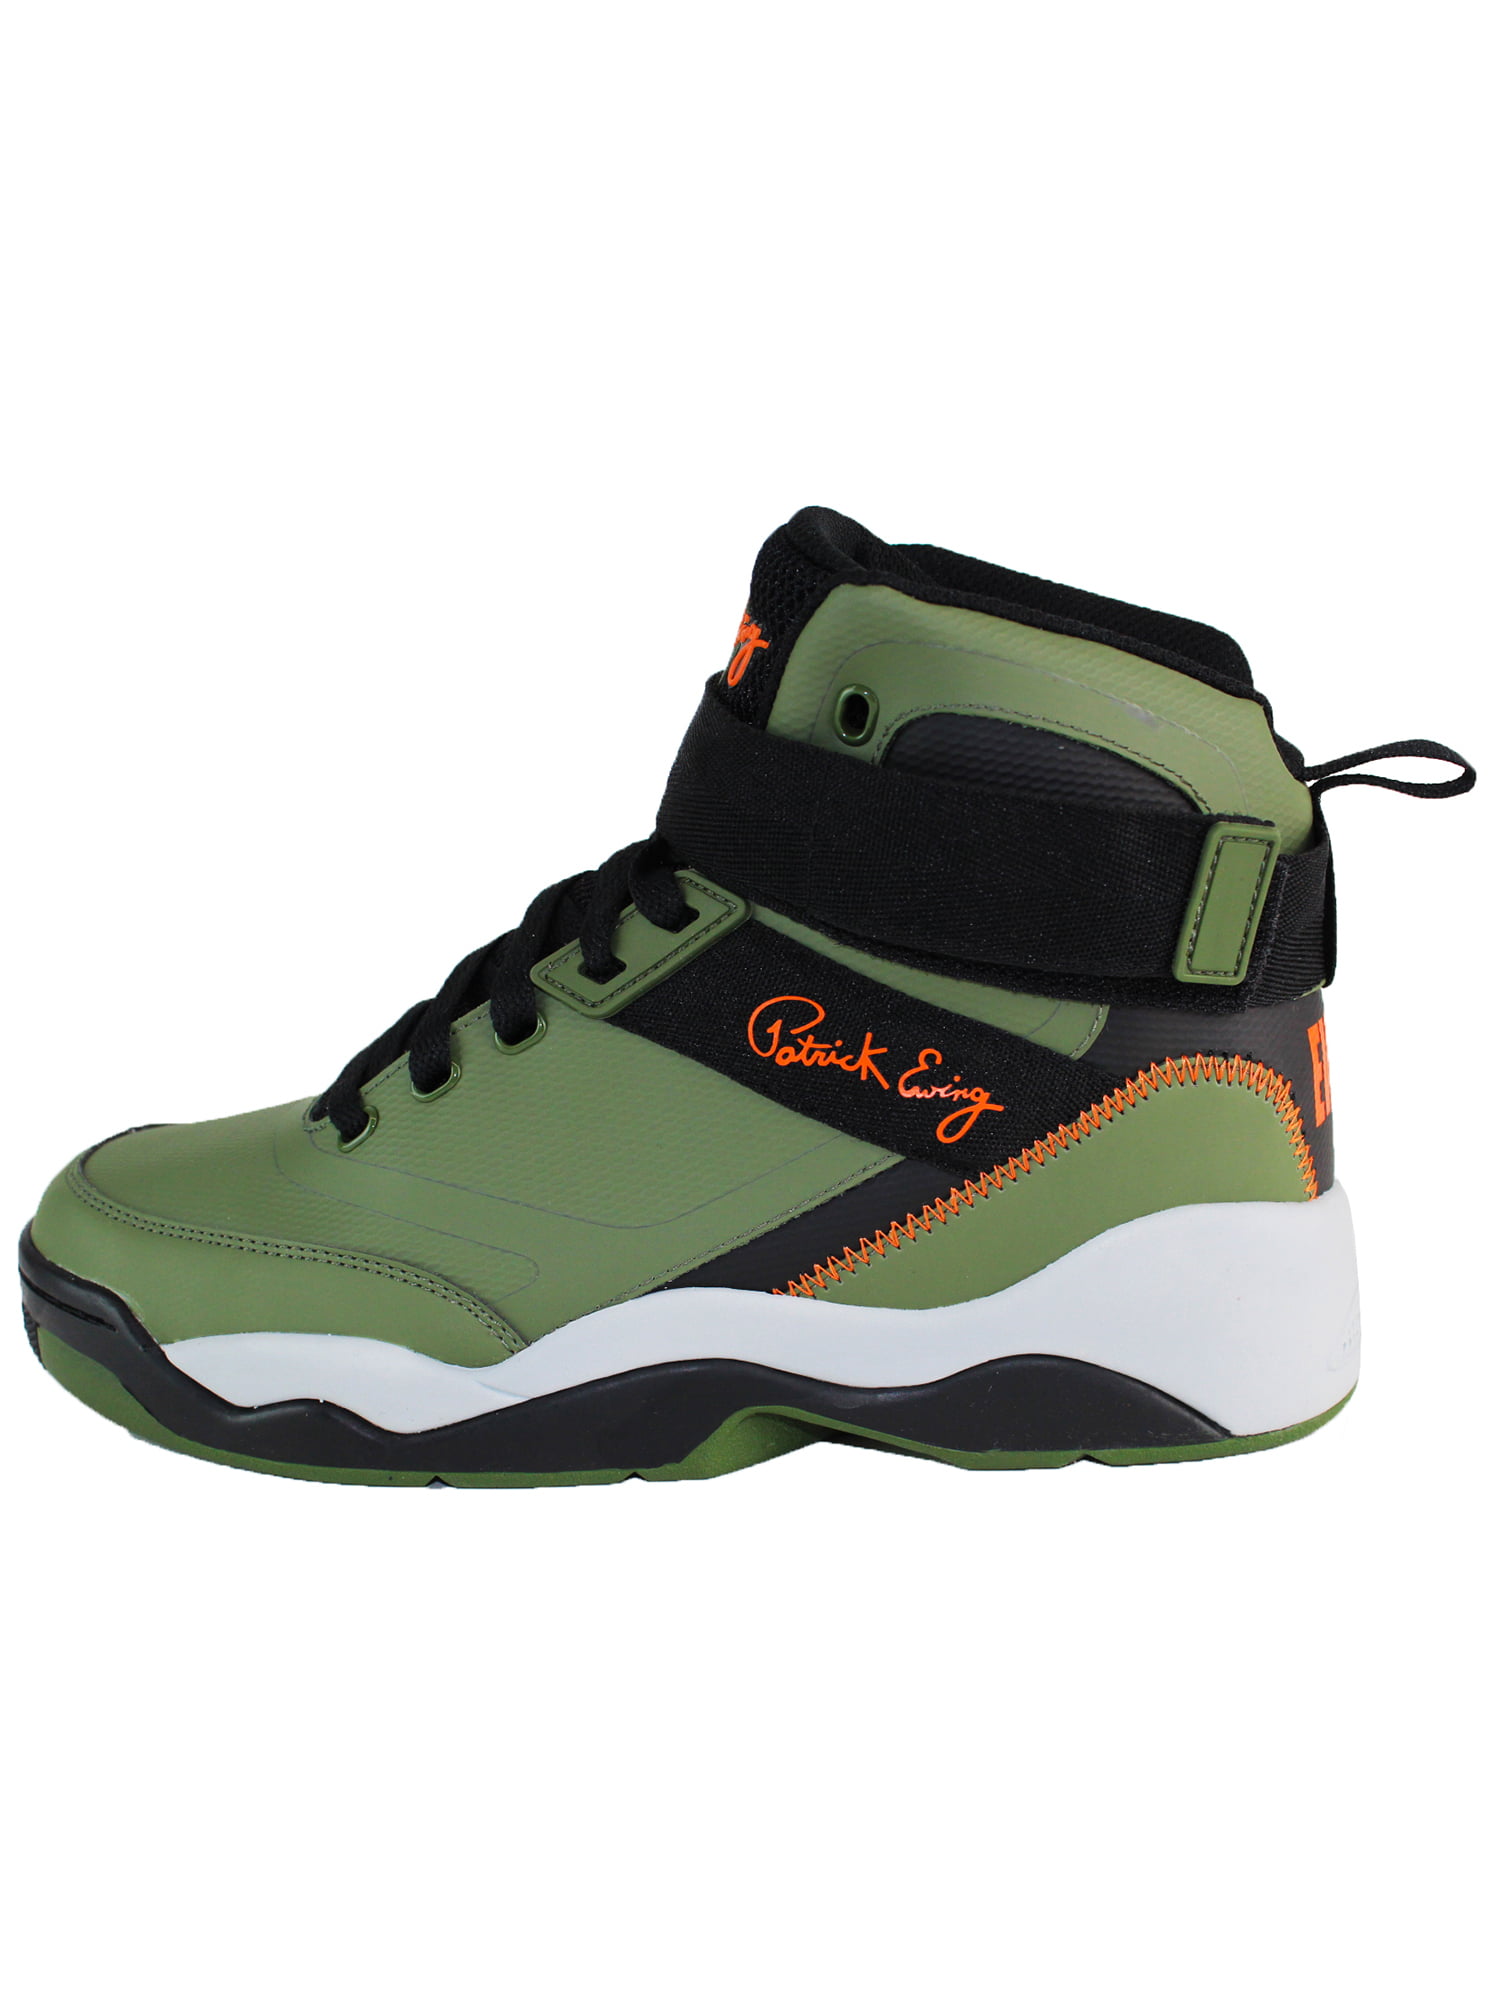 Patrick Ewing Patrick Ewing Athletics 33 Hi 2 0 Mens Basketball Fashion Sneakers Athletic Shoes Chive Black Orange Olive Green Walmart Com Walmart Com